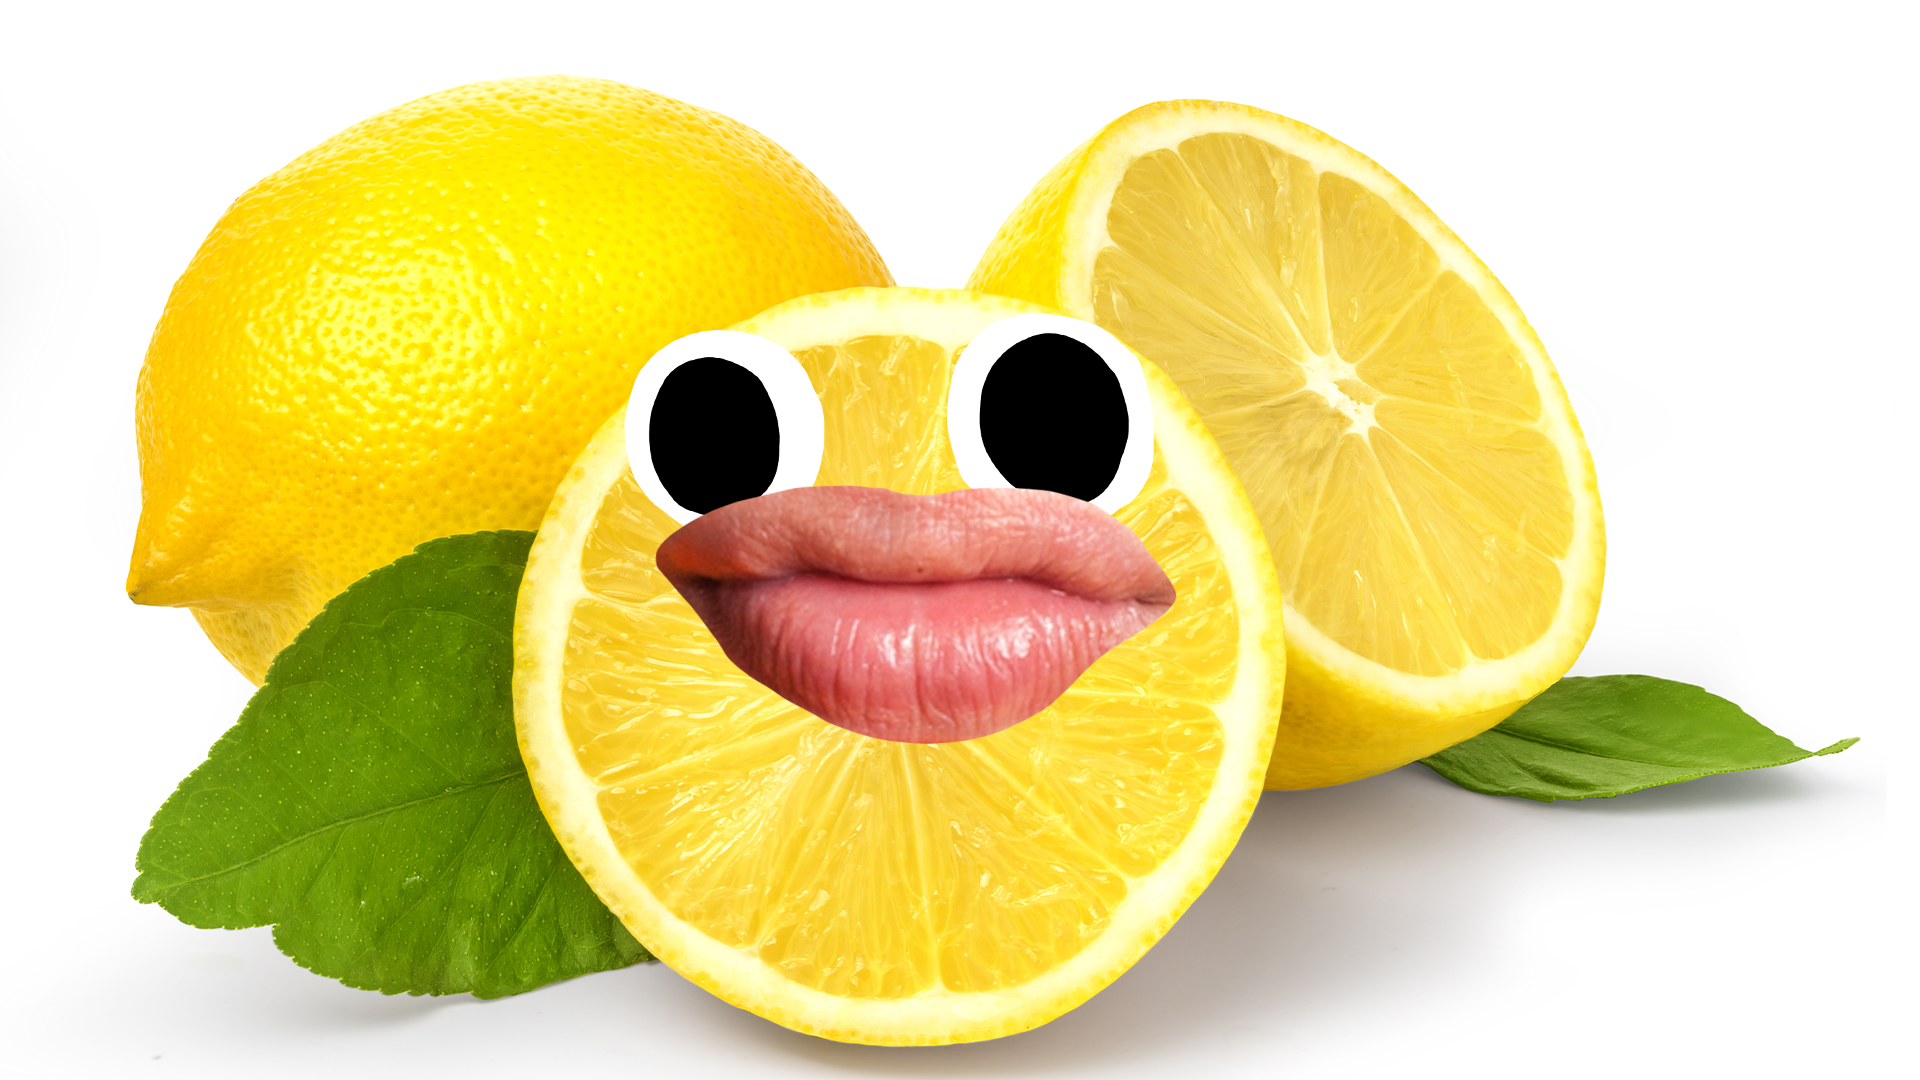 Lemon with goofy face on white background 